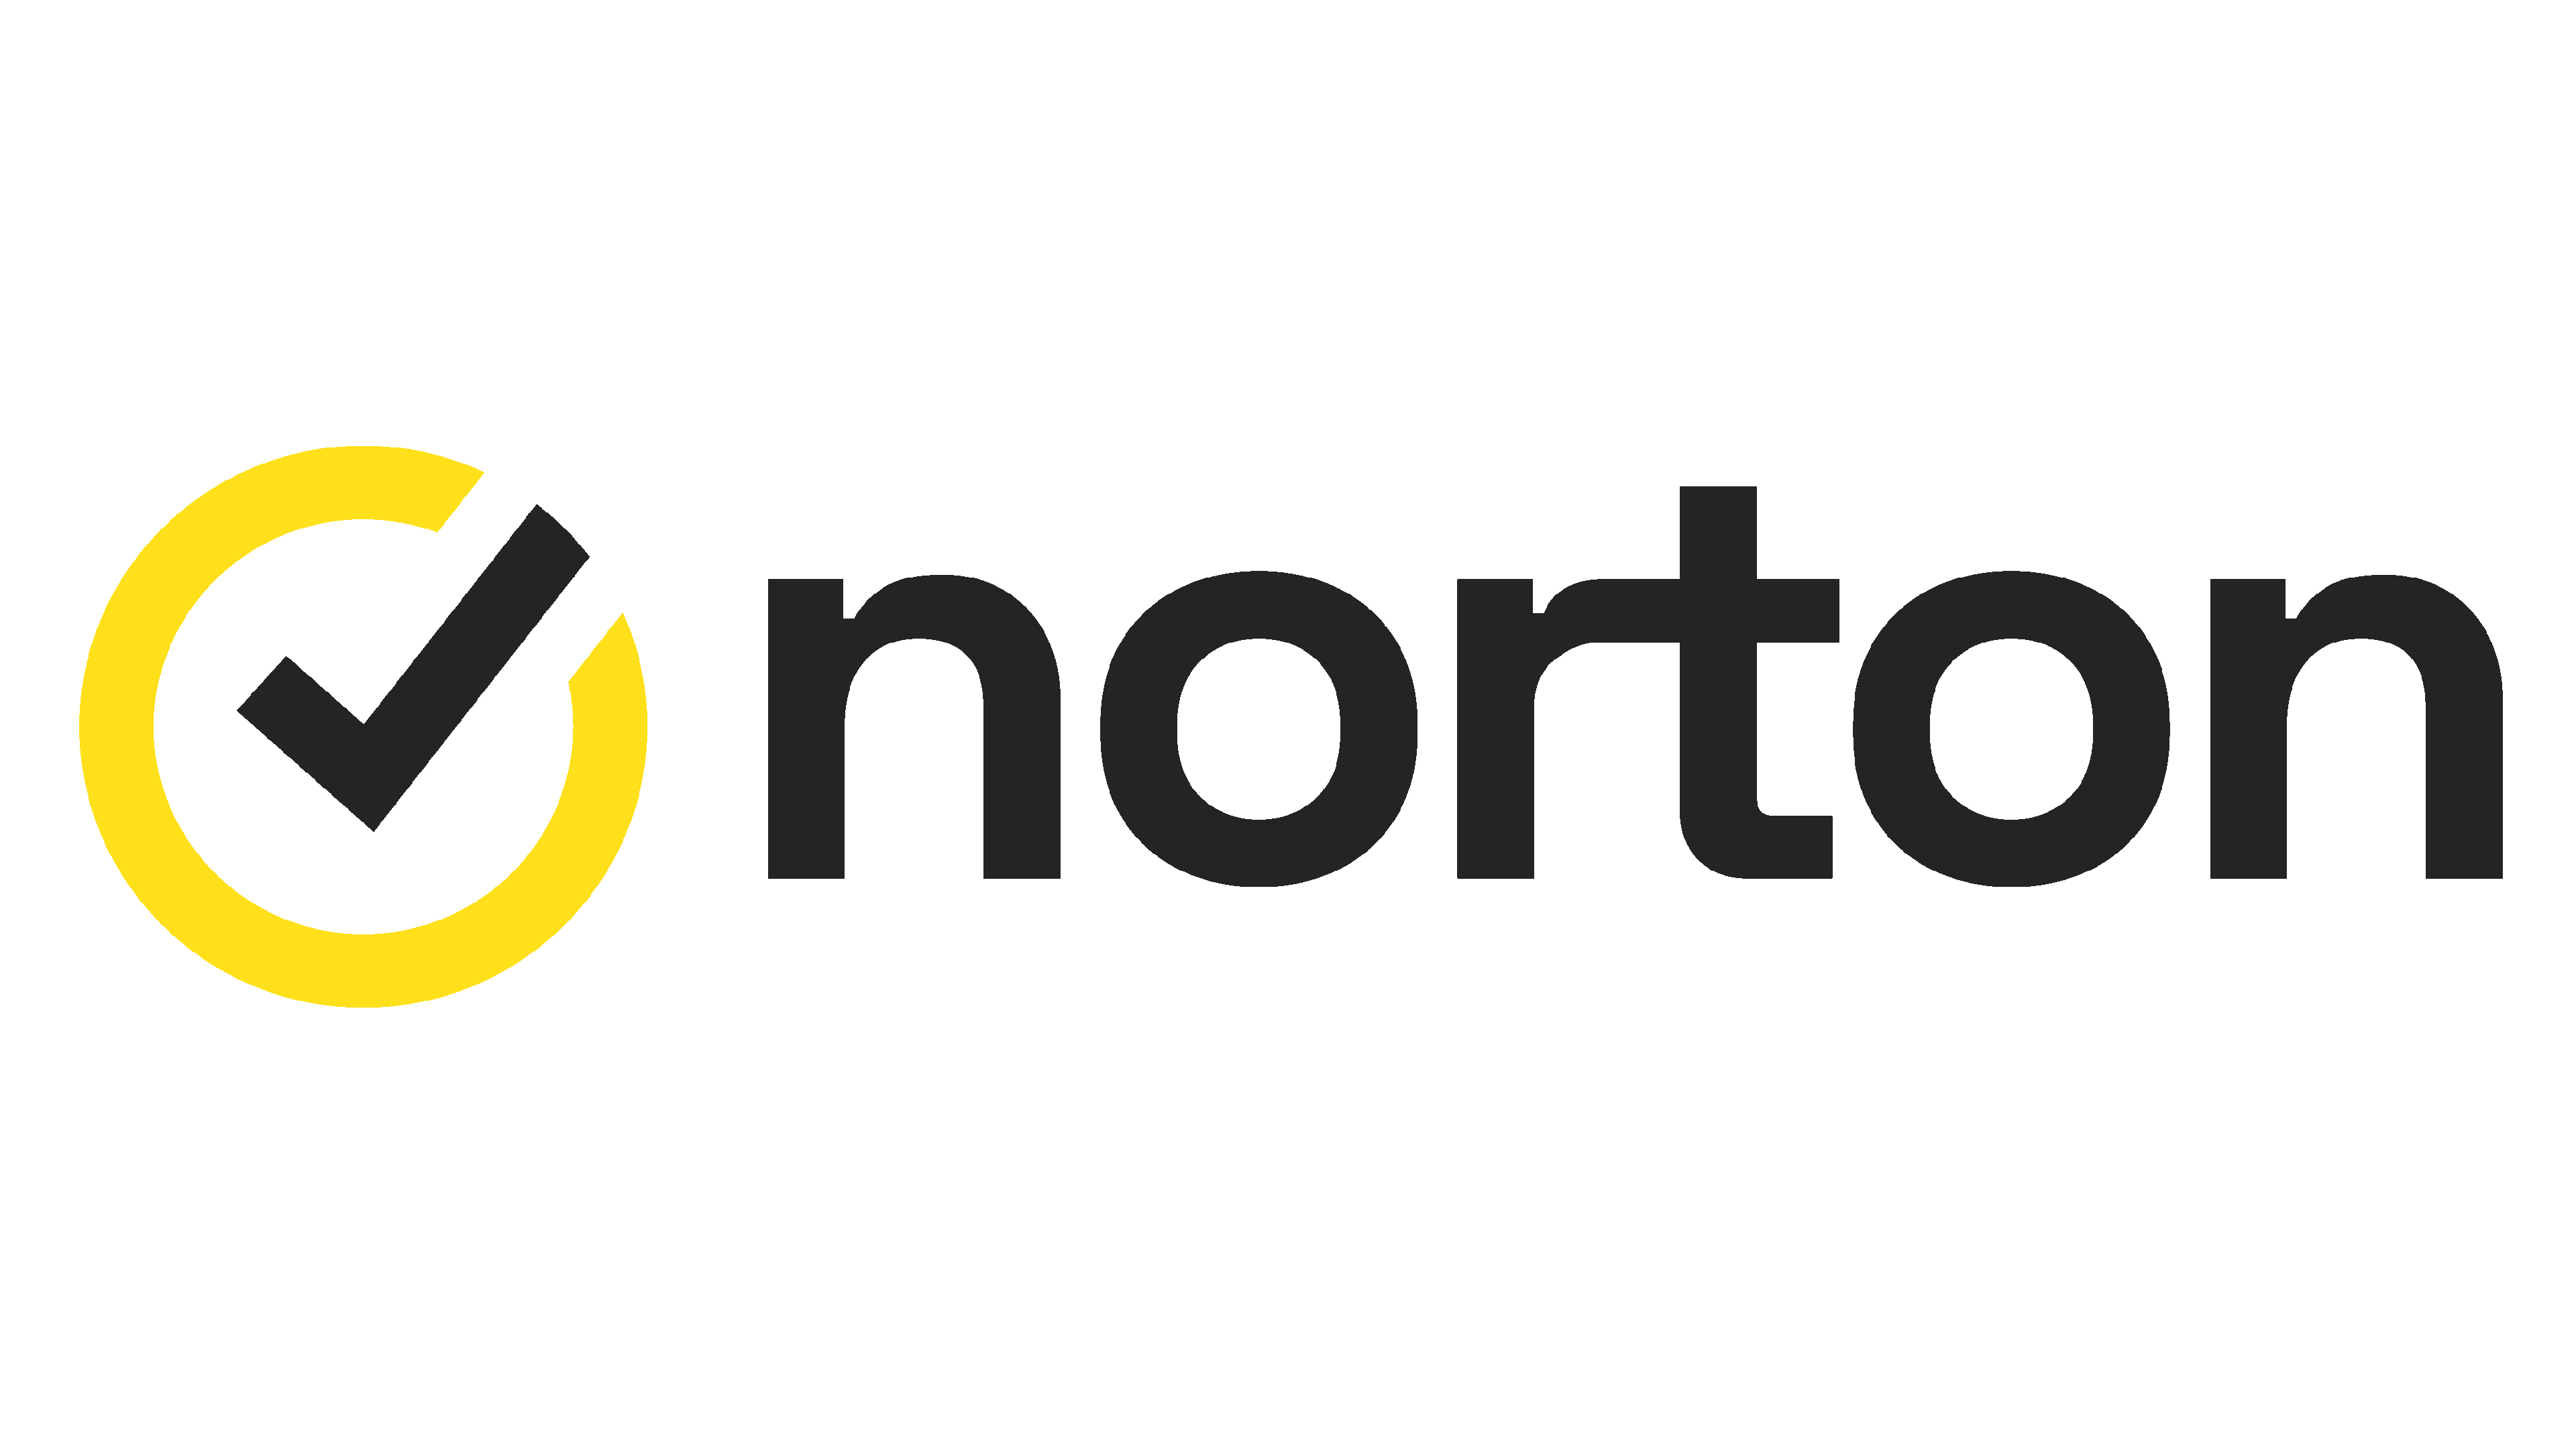 Norton security program logo